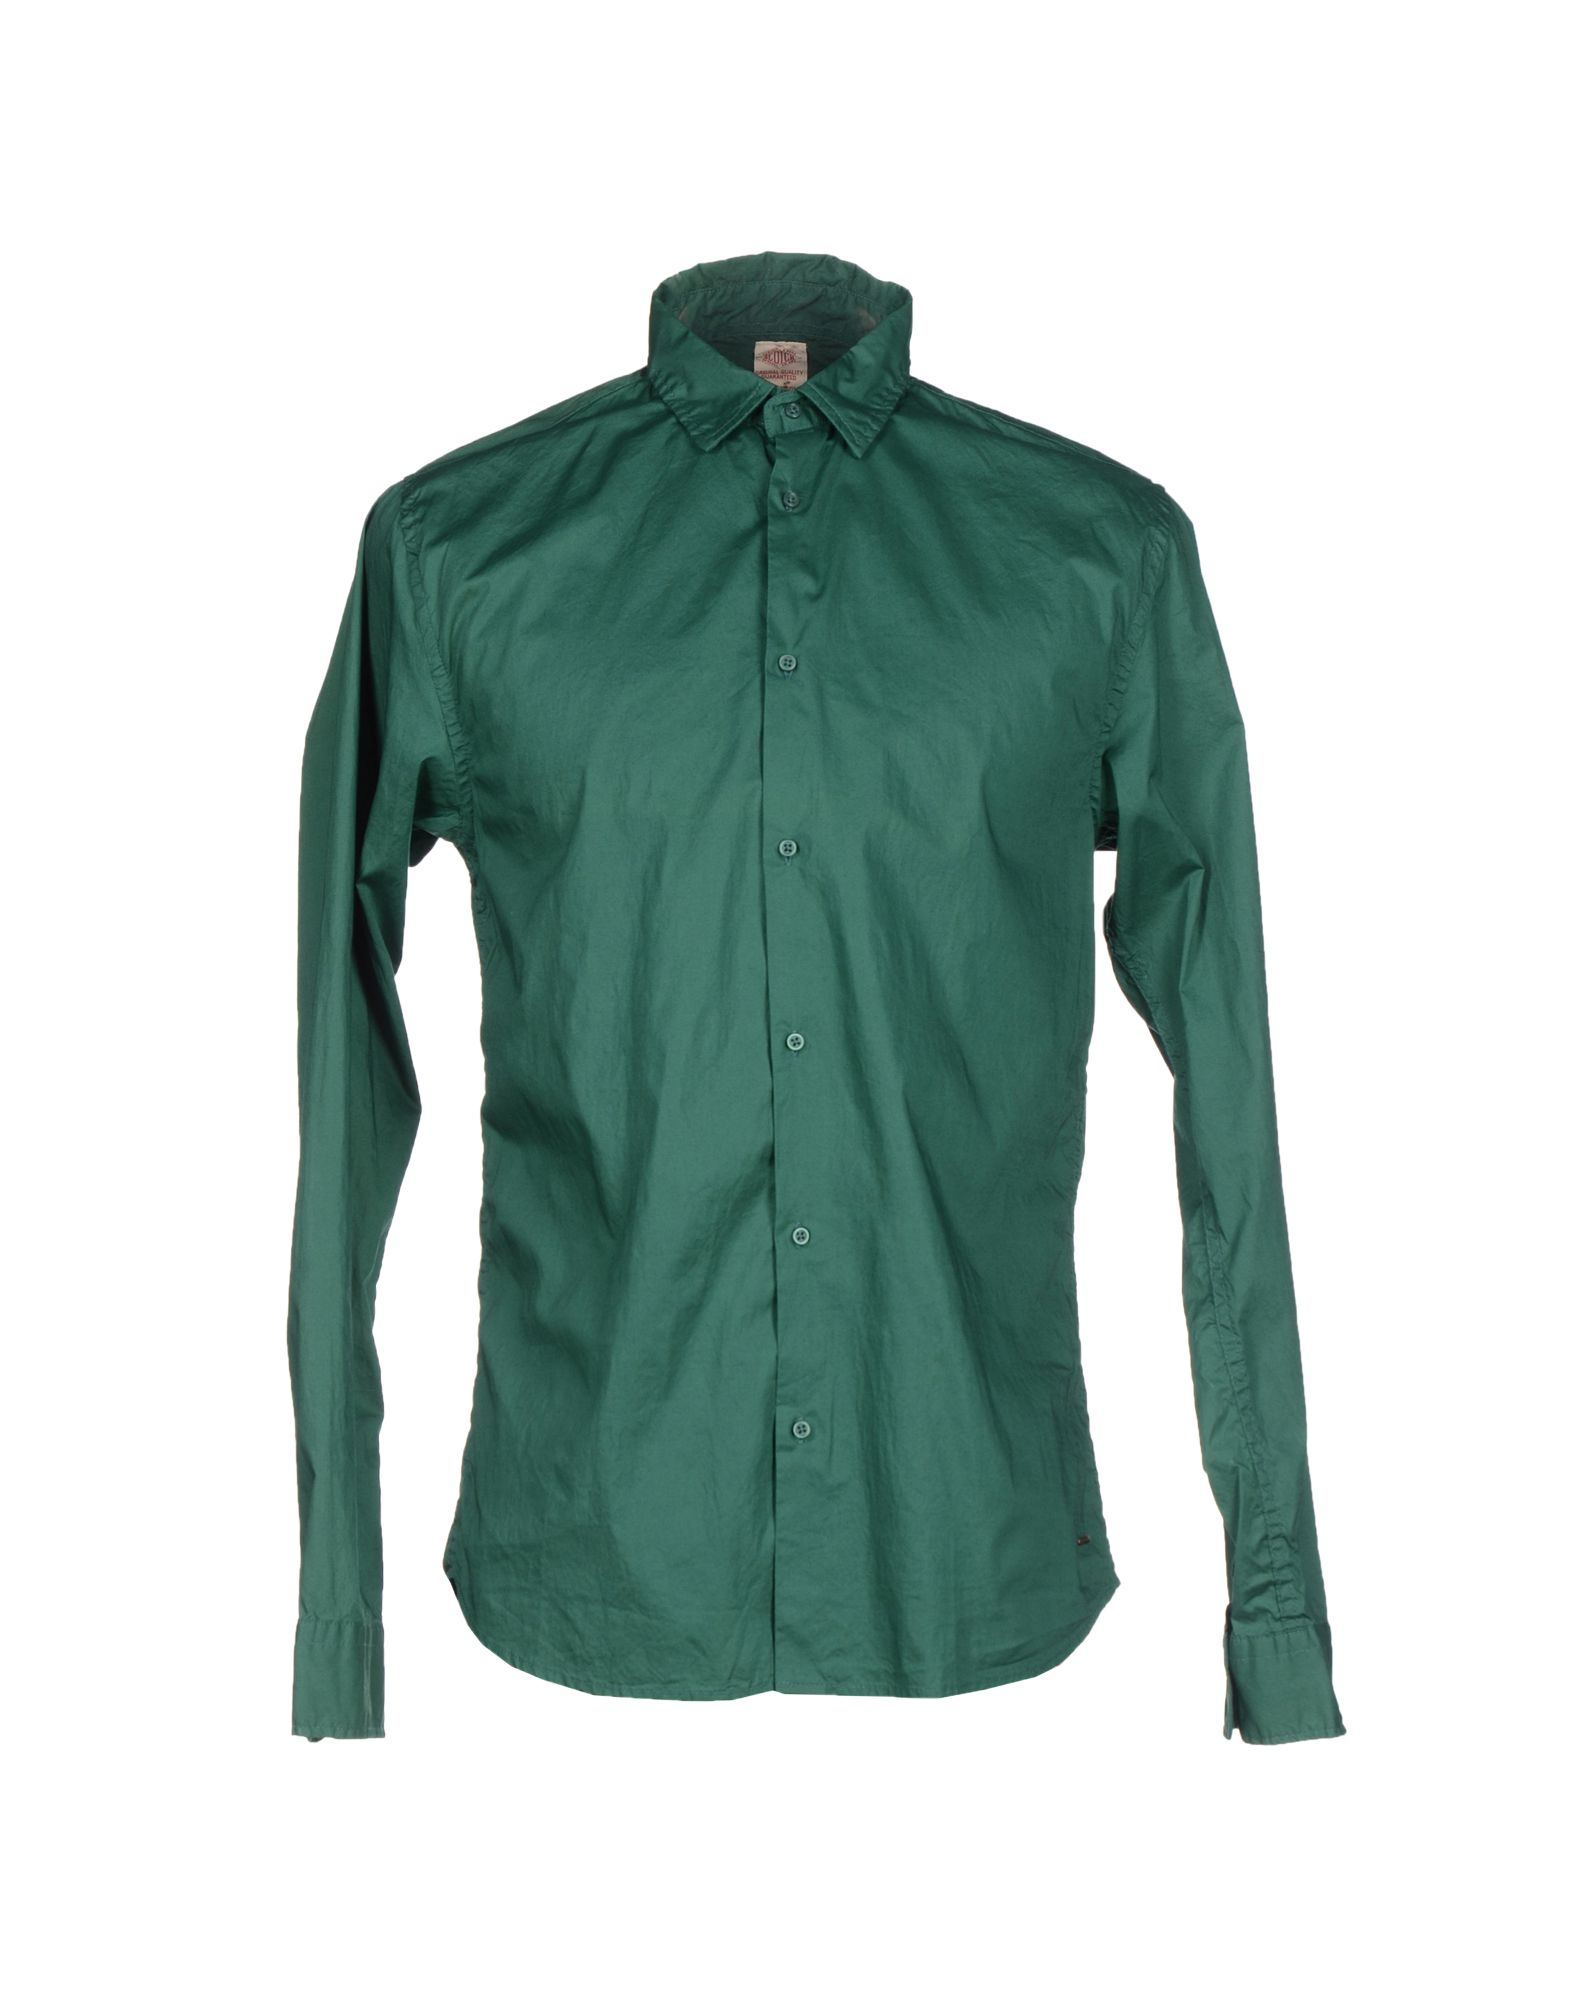 Scotch & soda Shirt in Green for Men (Emerald green) | Lyst